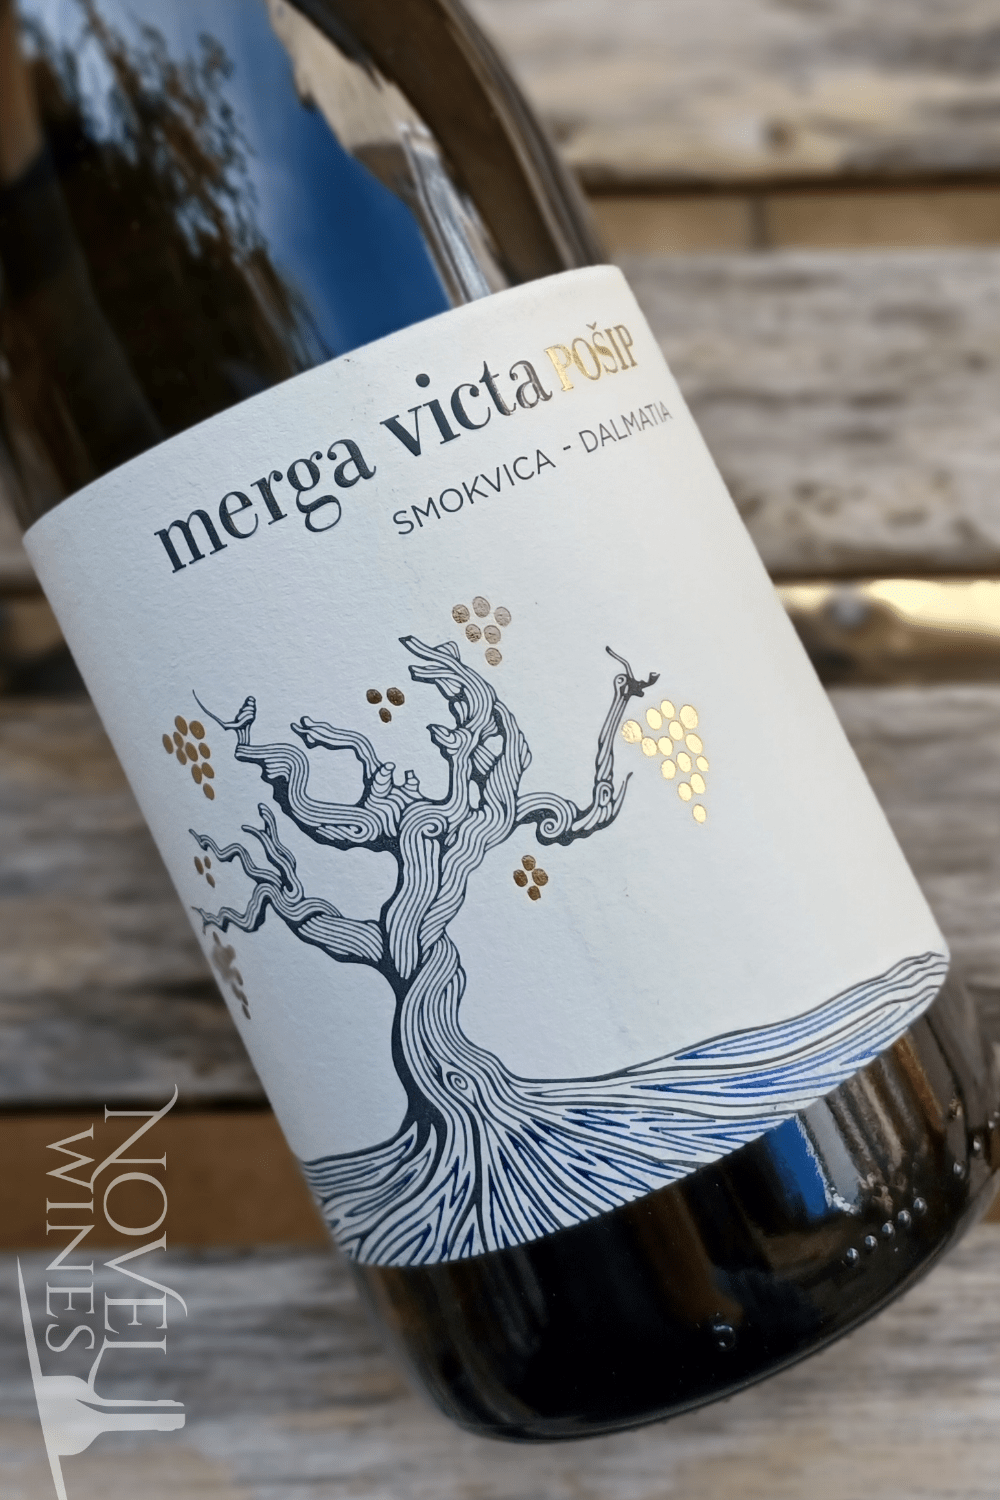 Novel Wines Merga Victa Posip 2021, Croatia